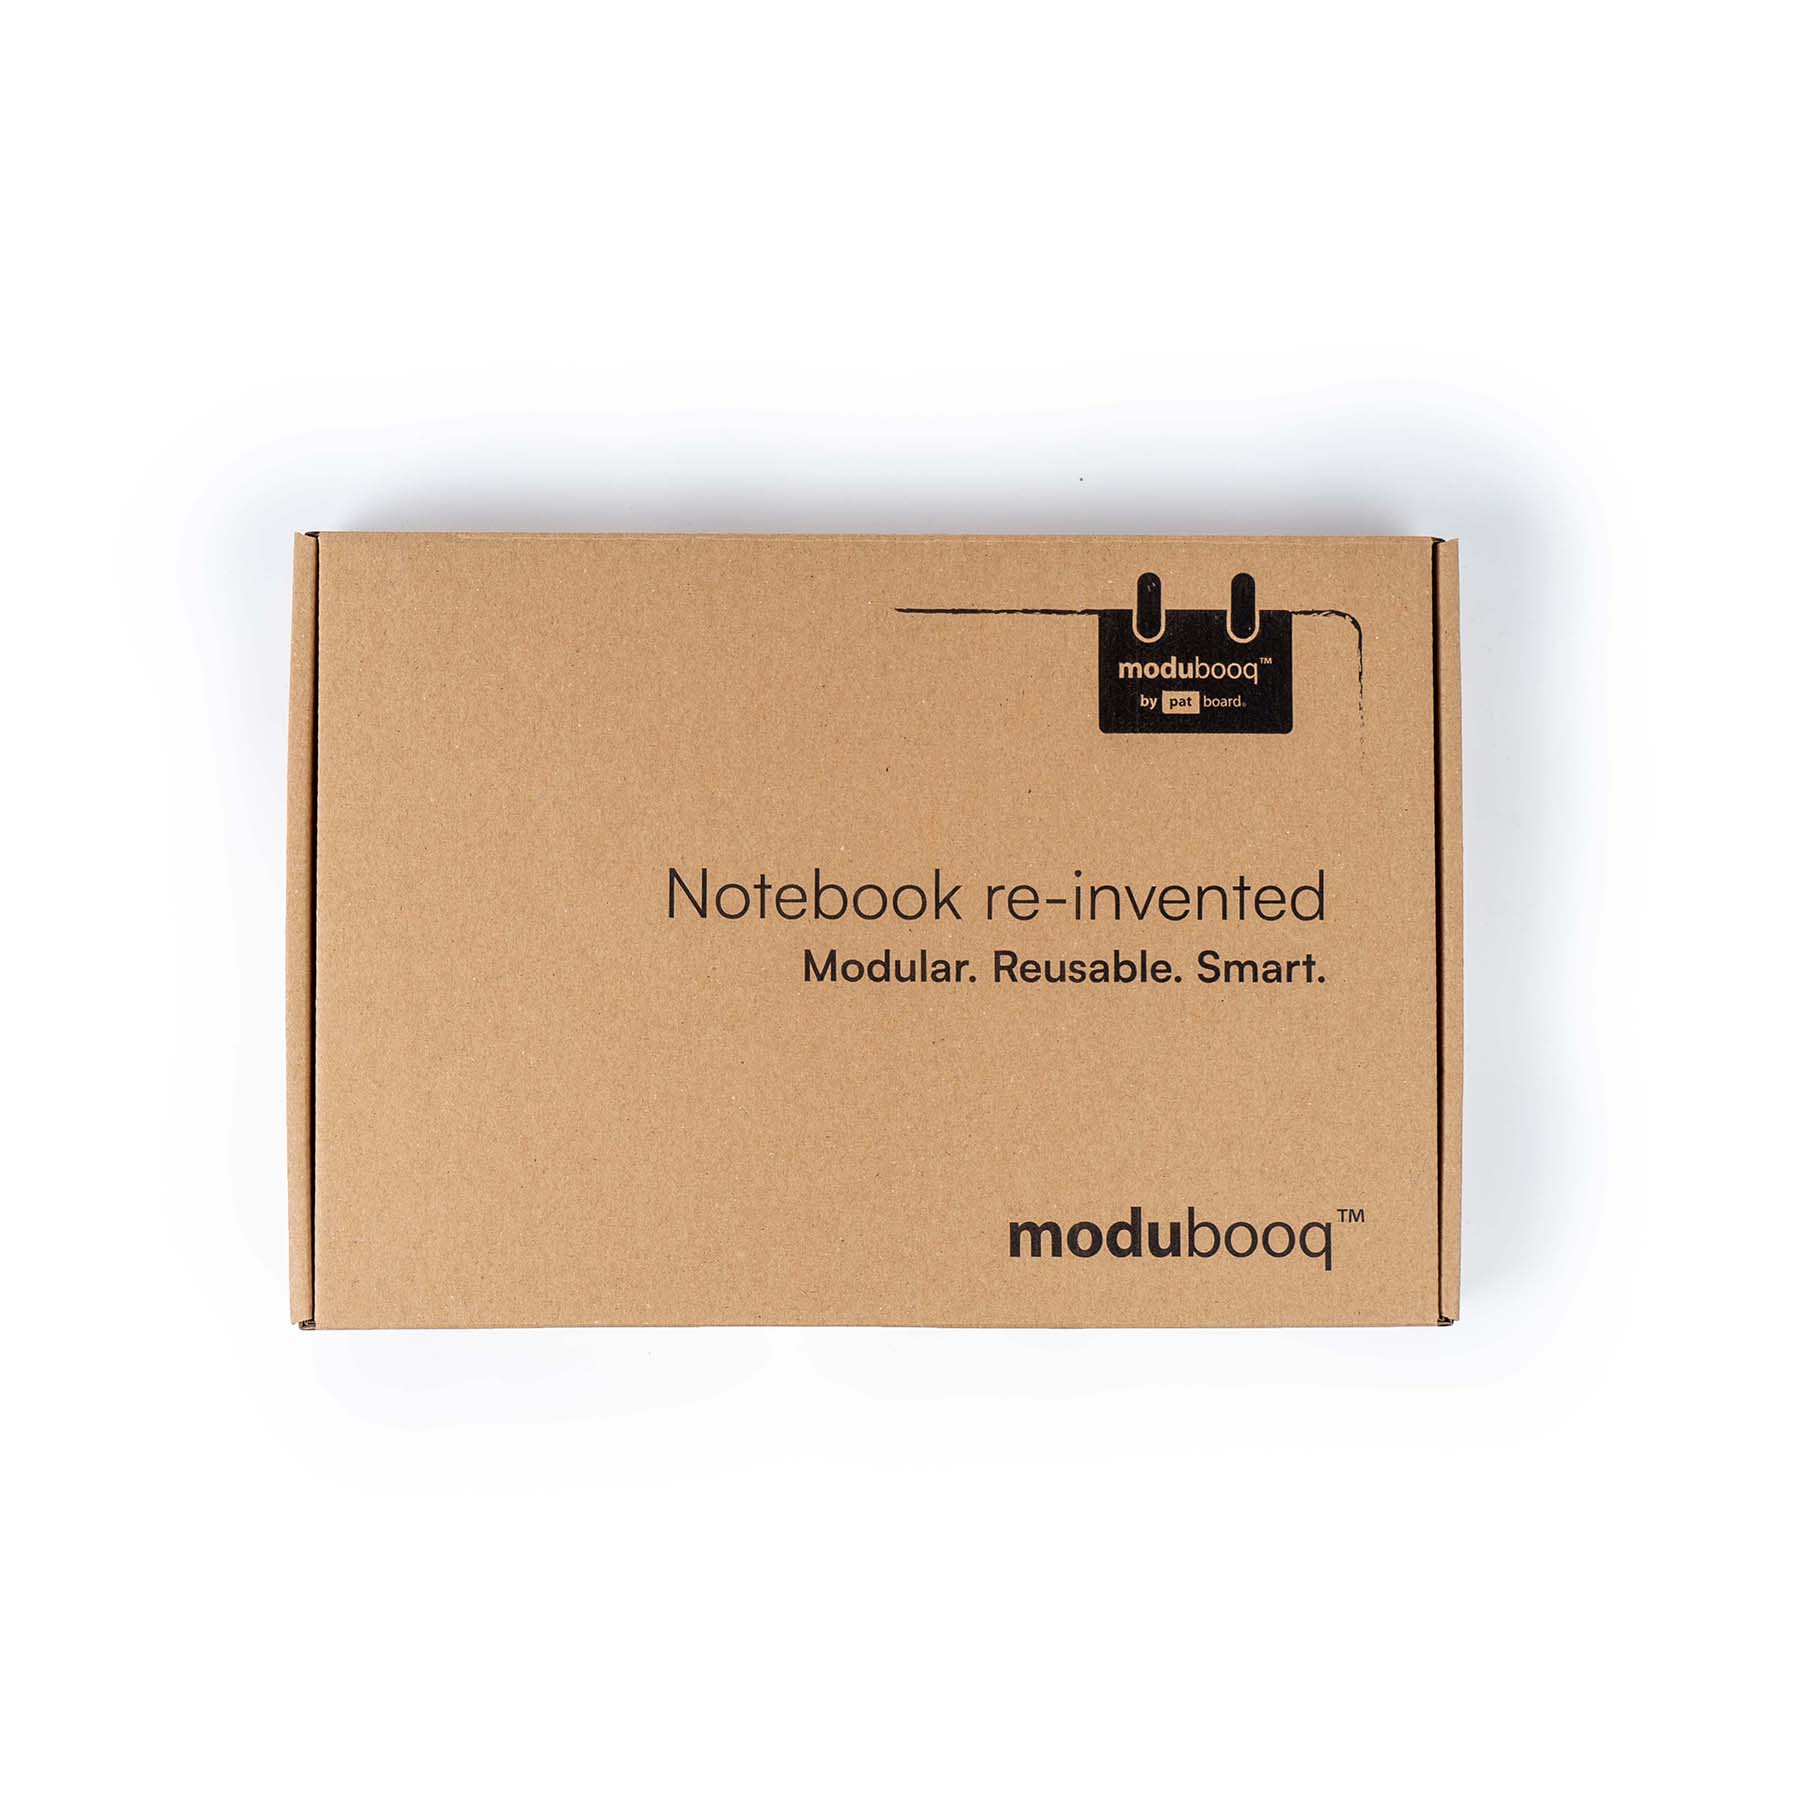 Modubooq™ by PATboard, Modular. Reusable. Smart.